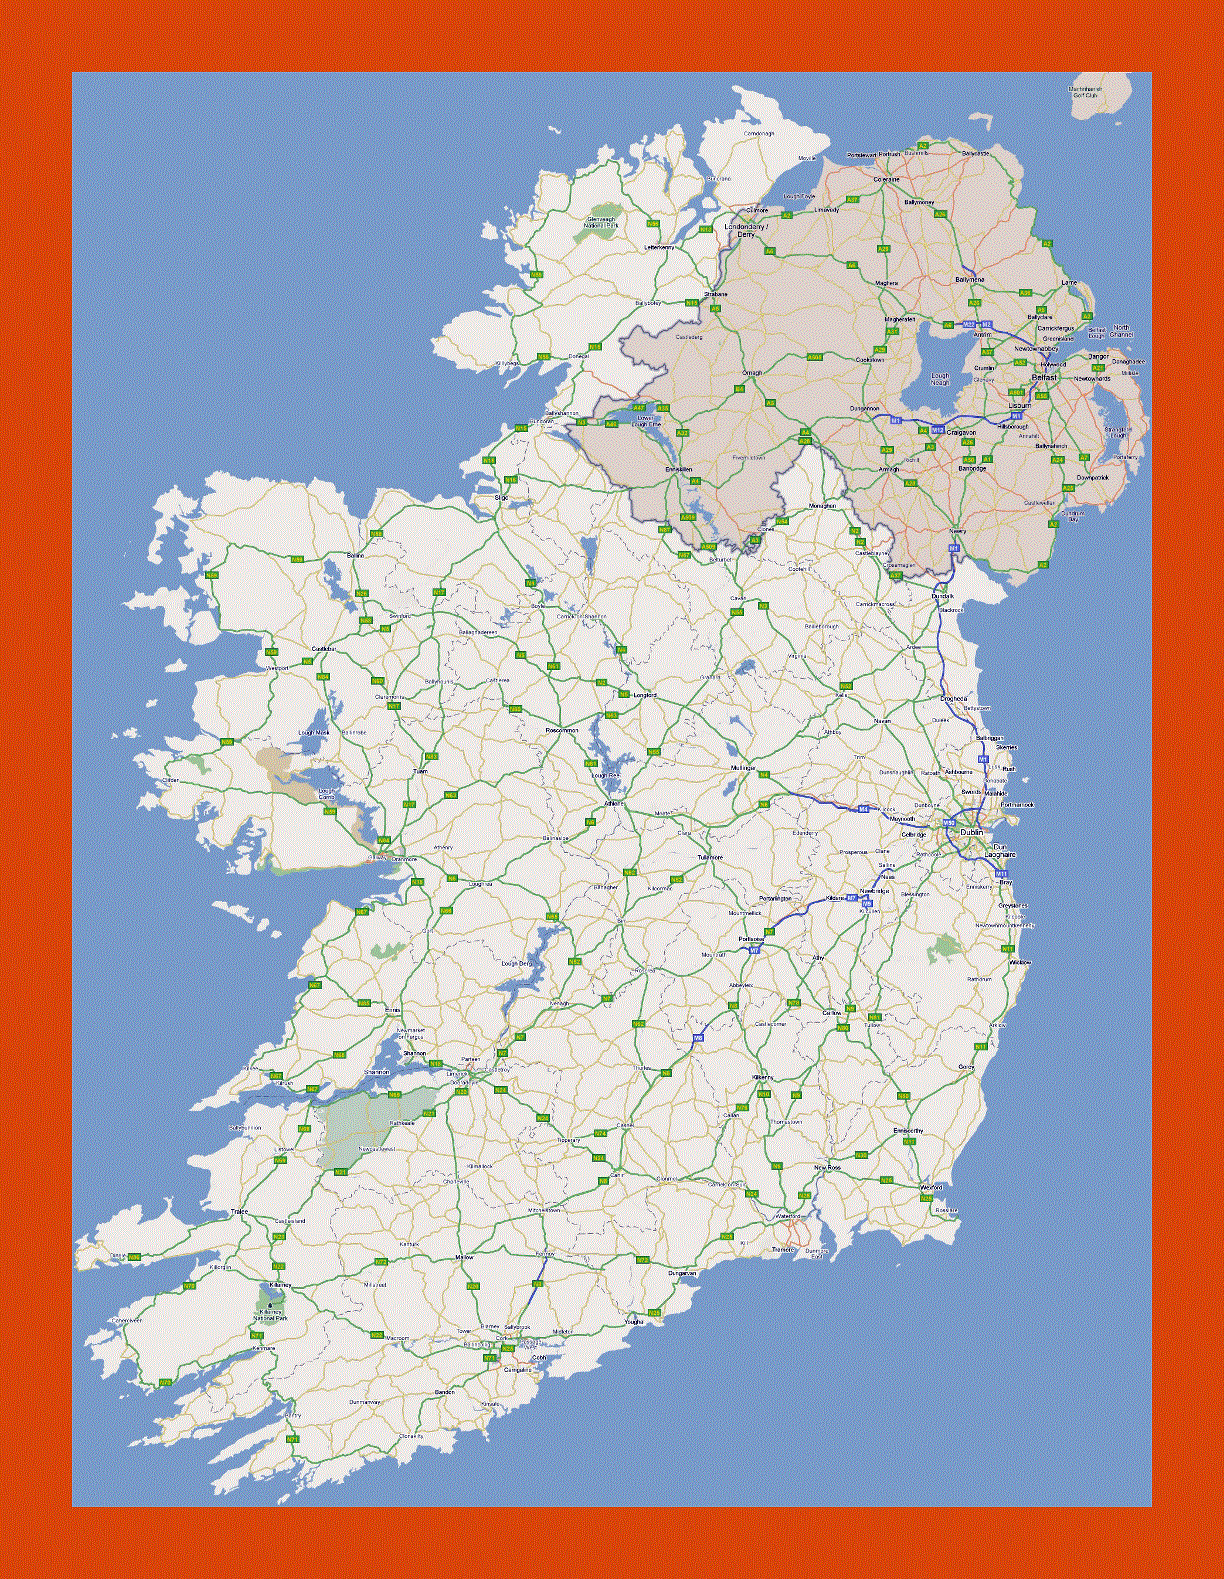 Road map of Ireland